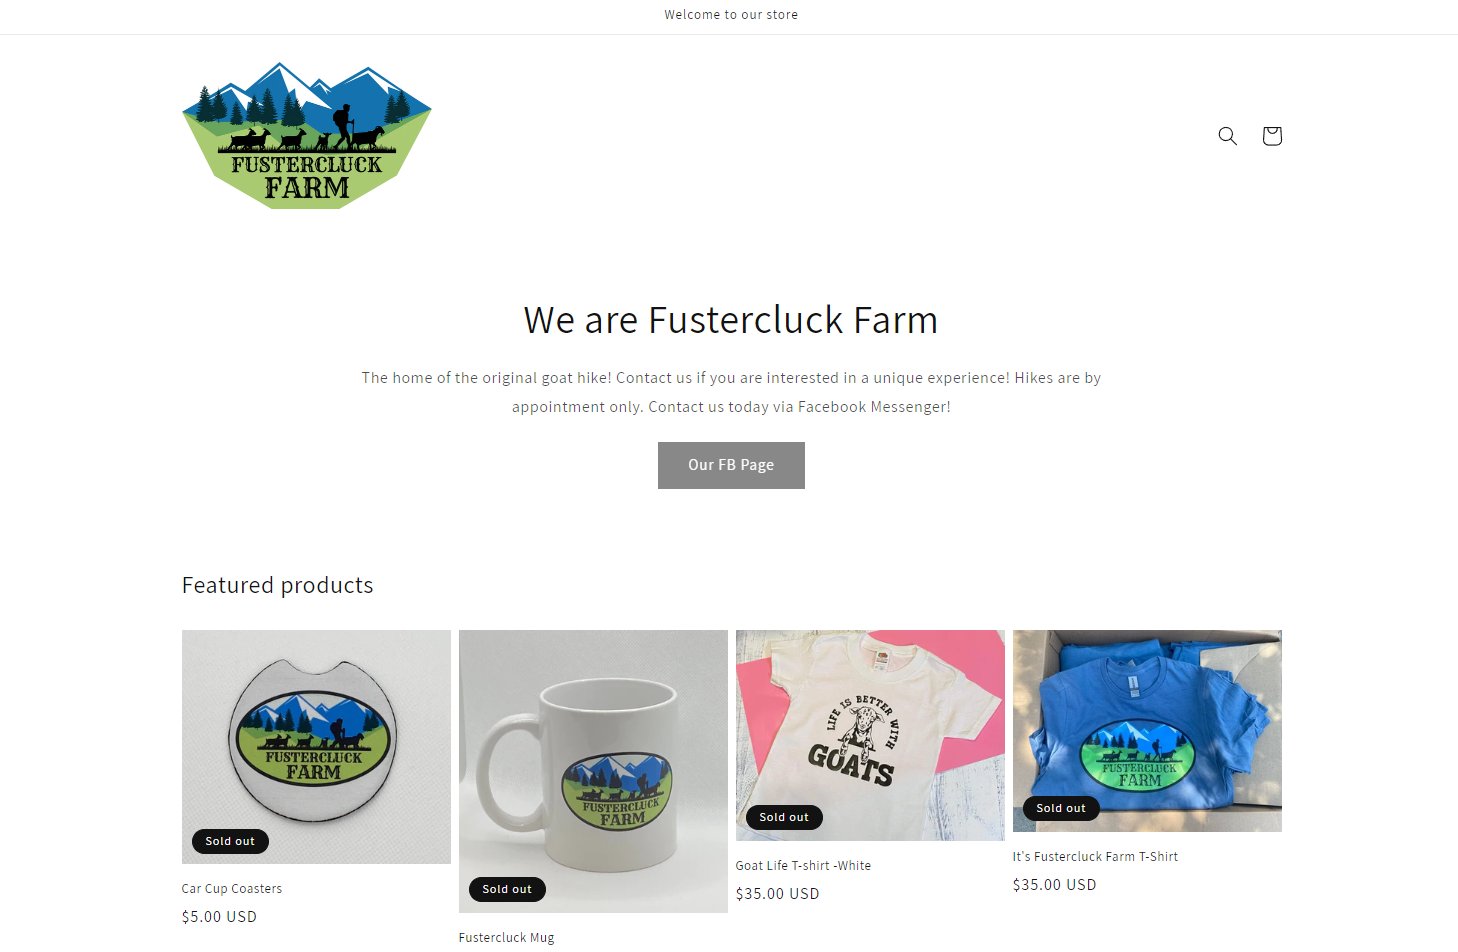 Fustercluck Farm Online Store